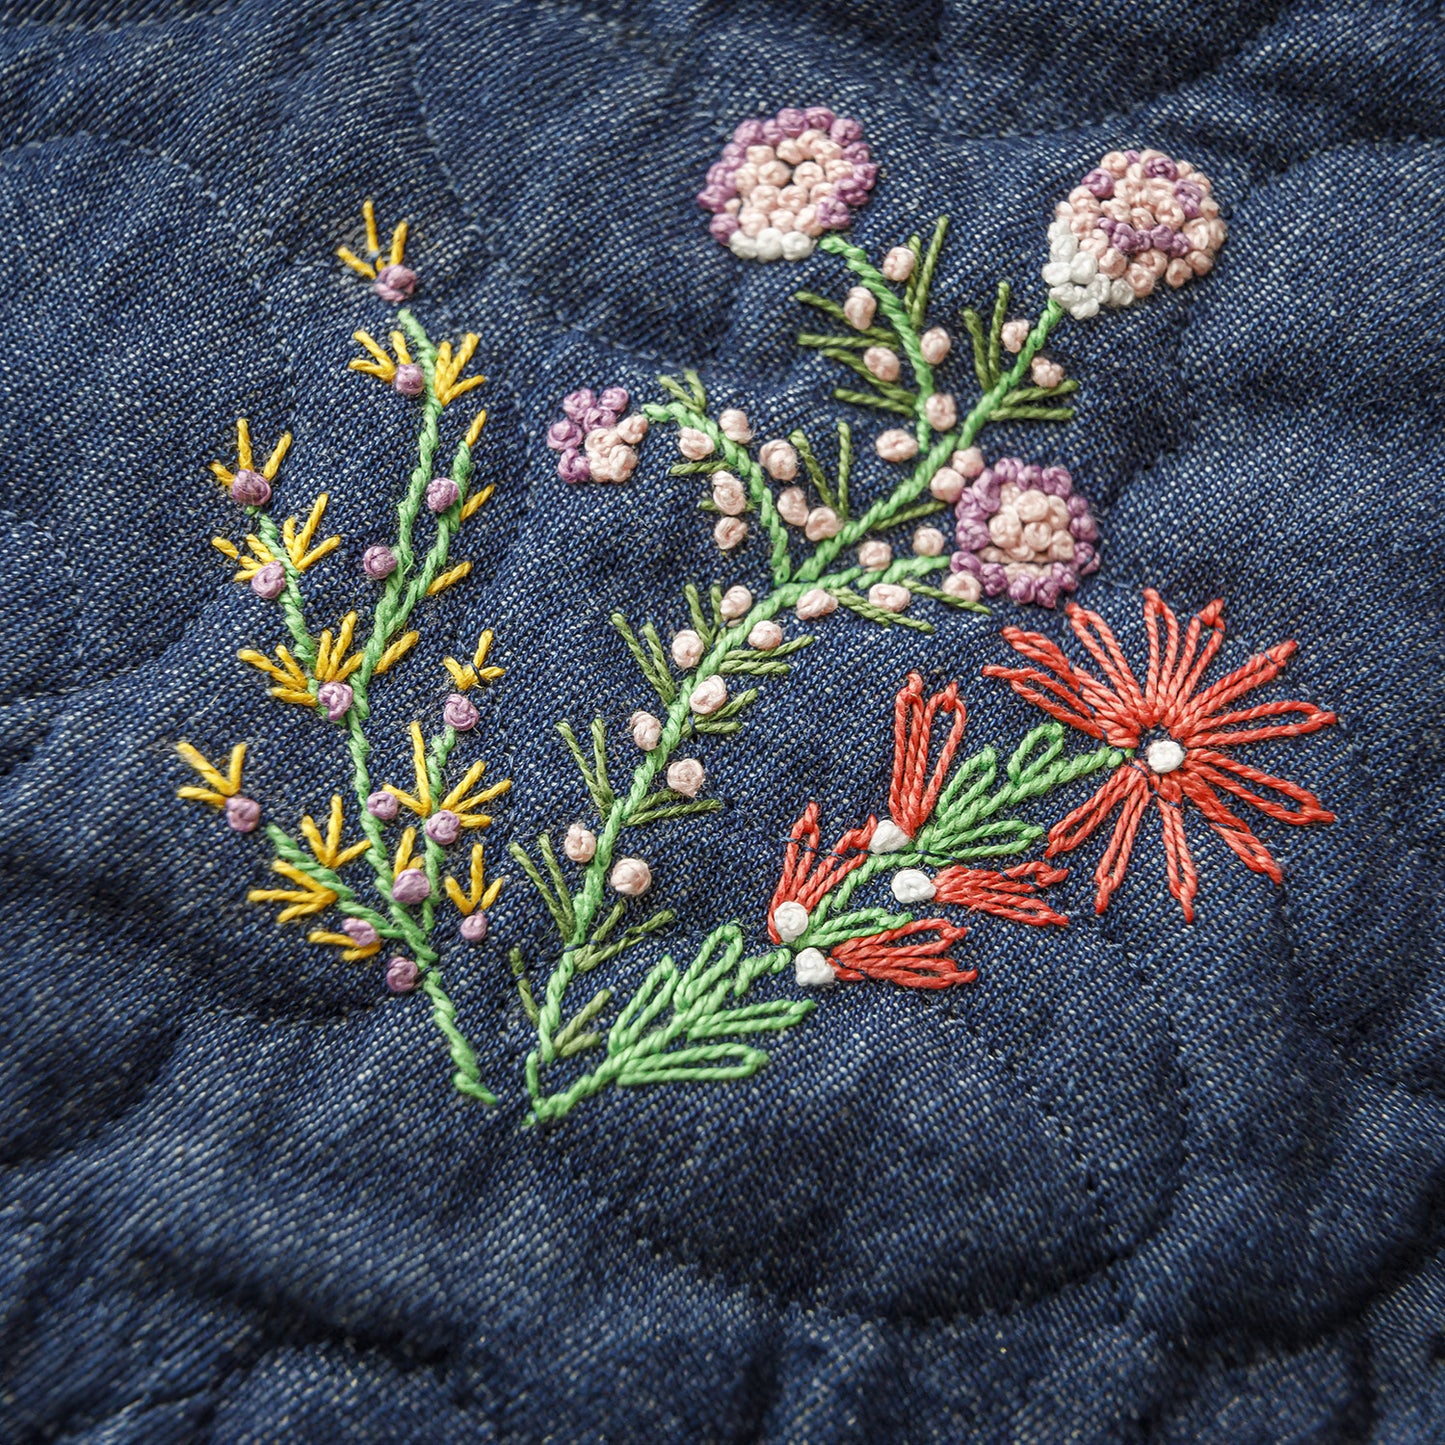 PREORDER - Ingrid's Wildflowers - An Heirloom Embroidery Kit by Missouri Star Alternative View #35